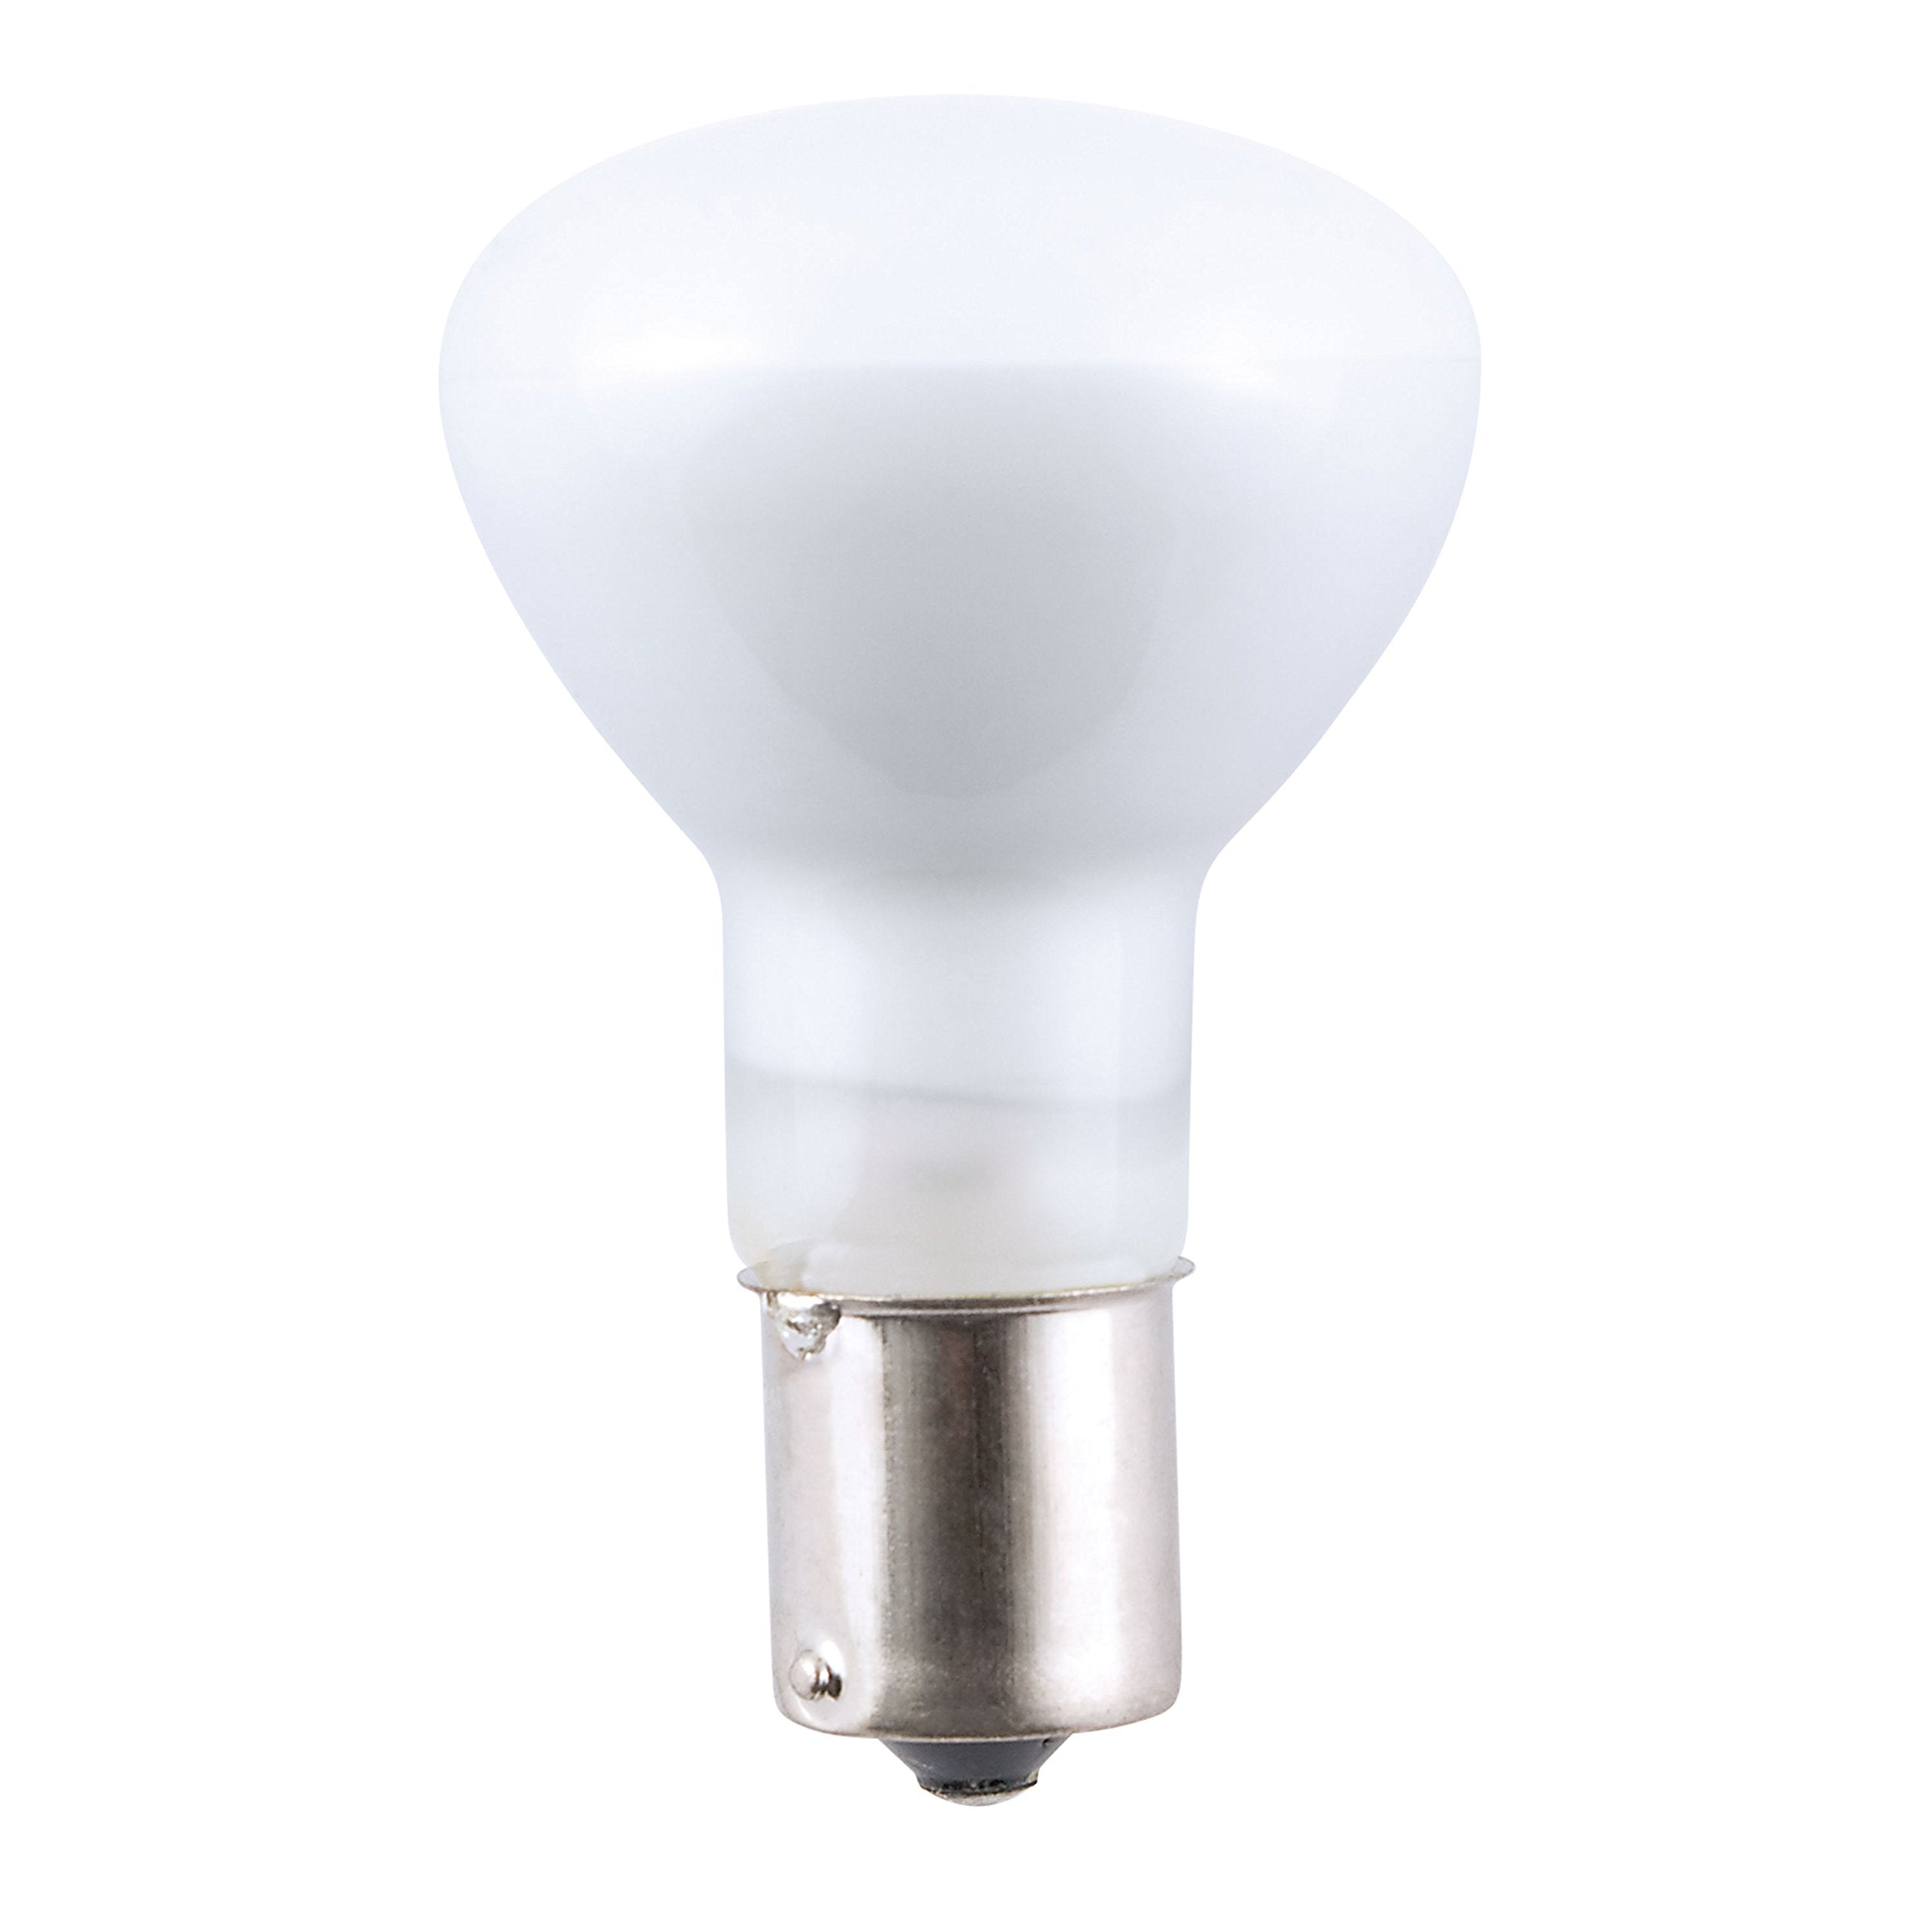 AP Products 016-01-1383 Bulb #1373